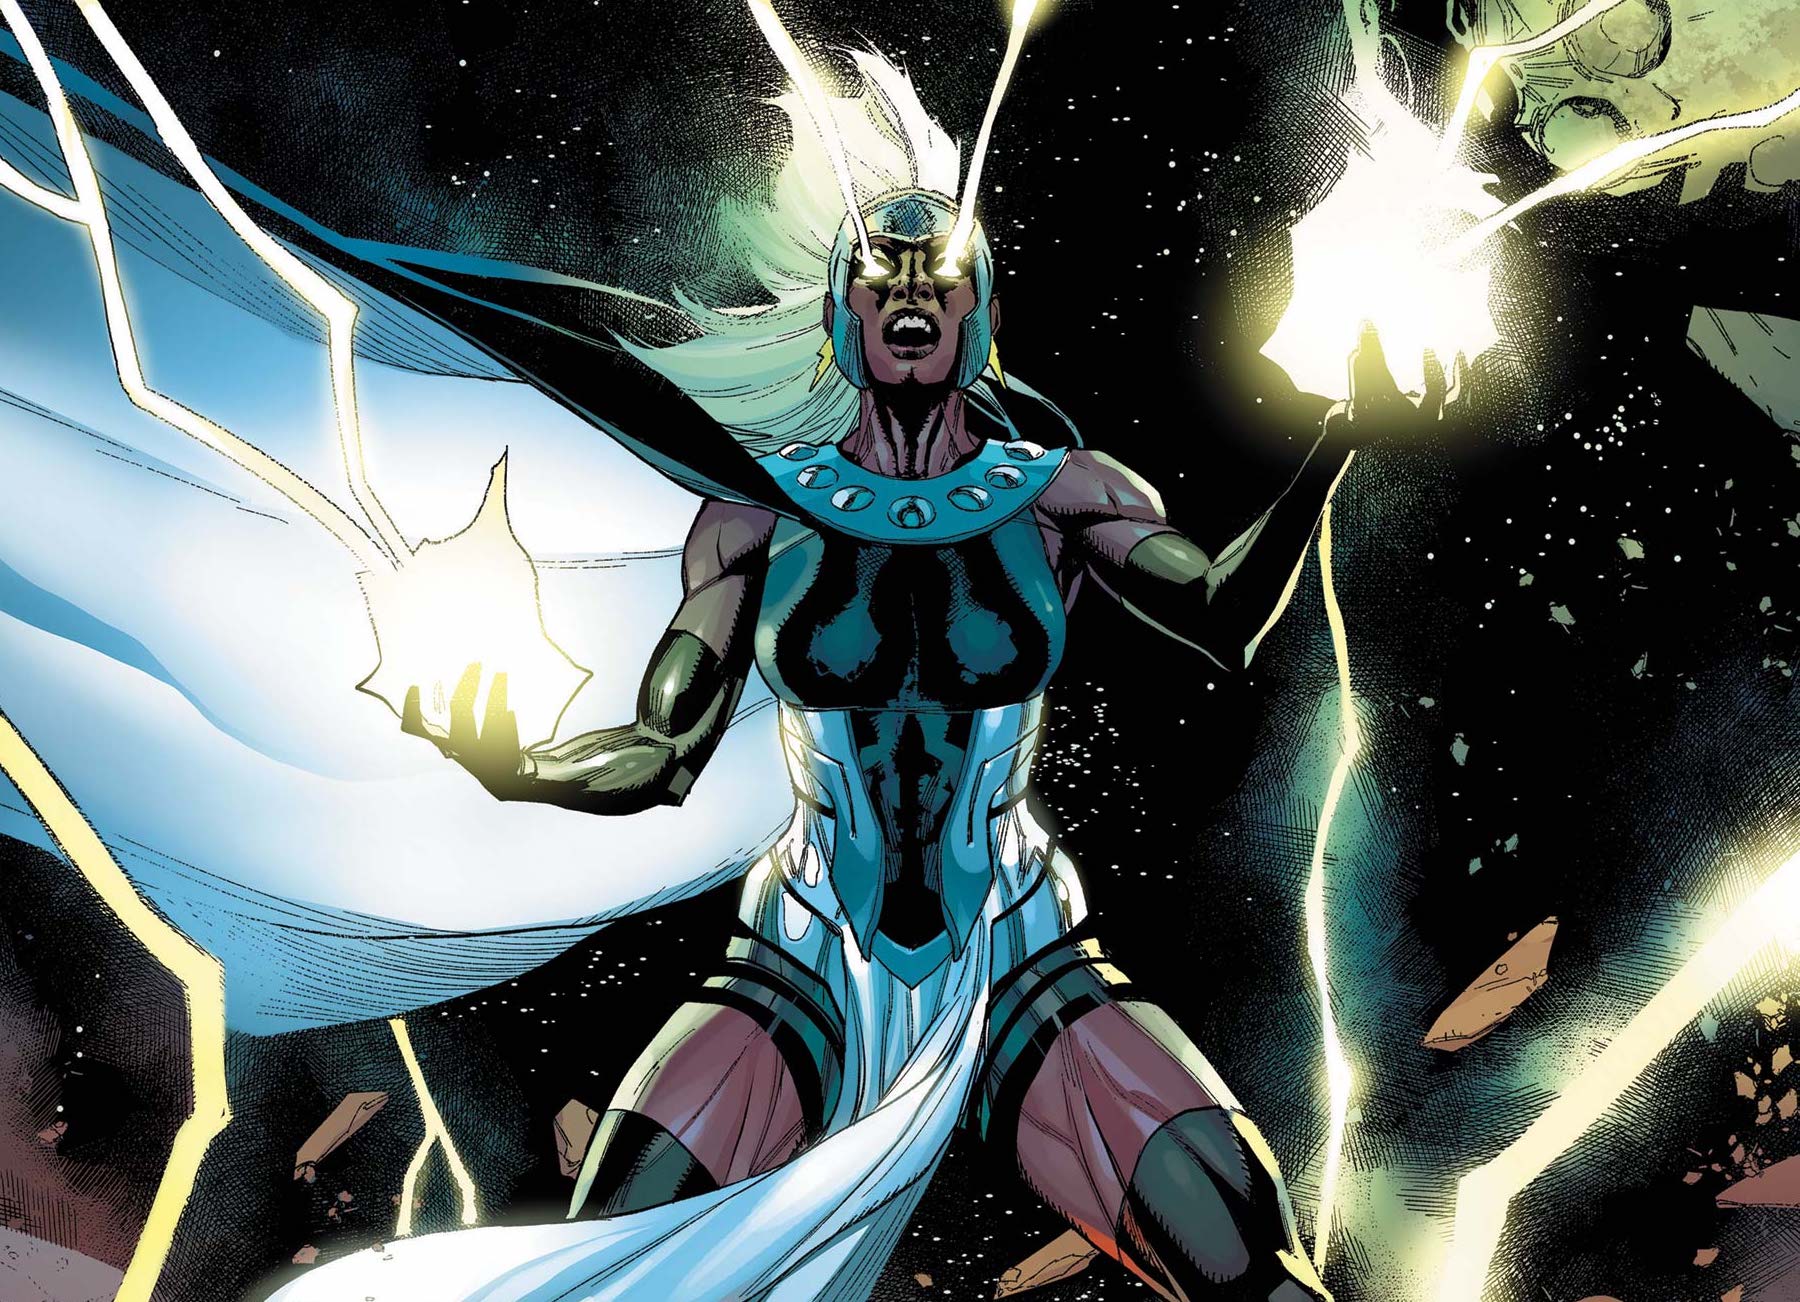 Storm & the Brotherhood of Mutants #1